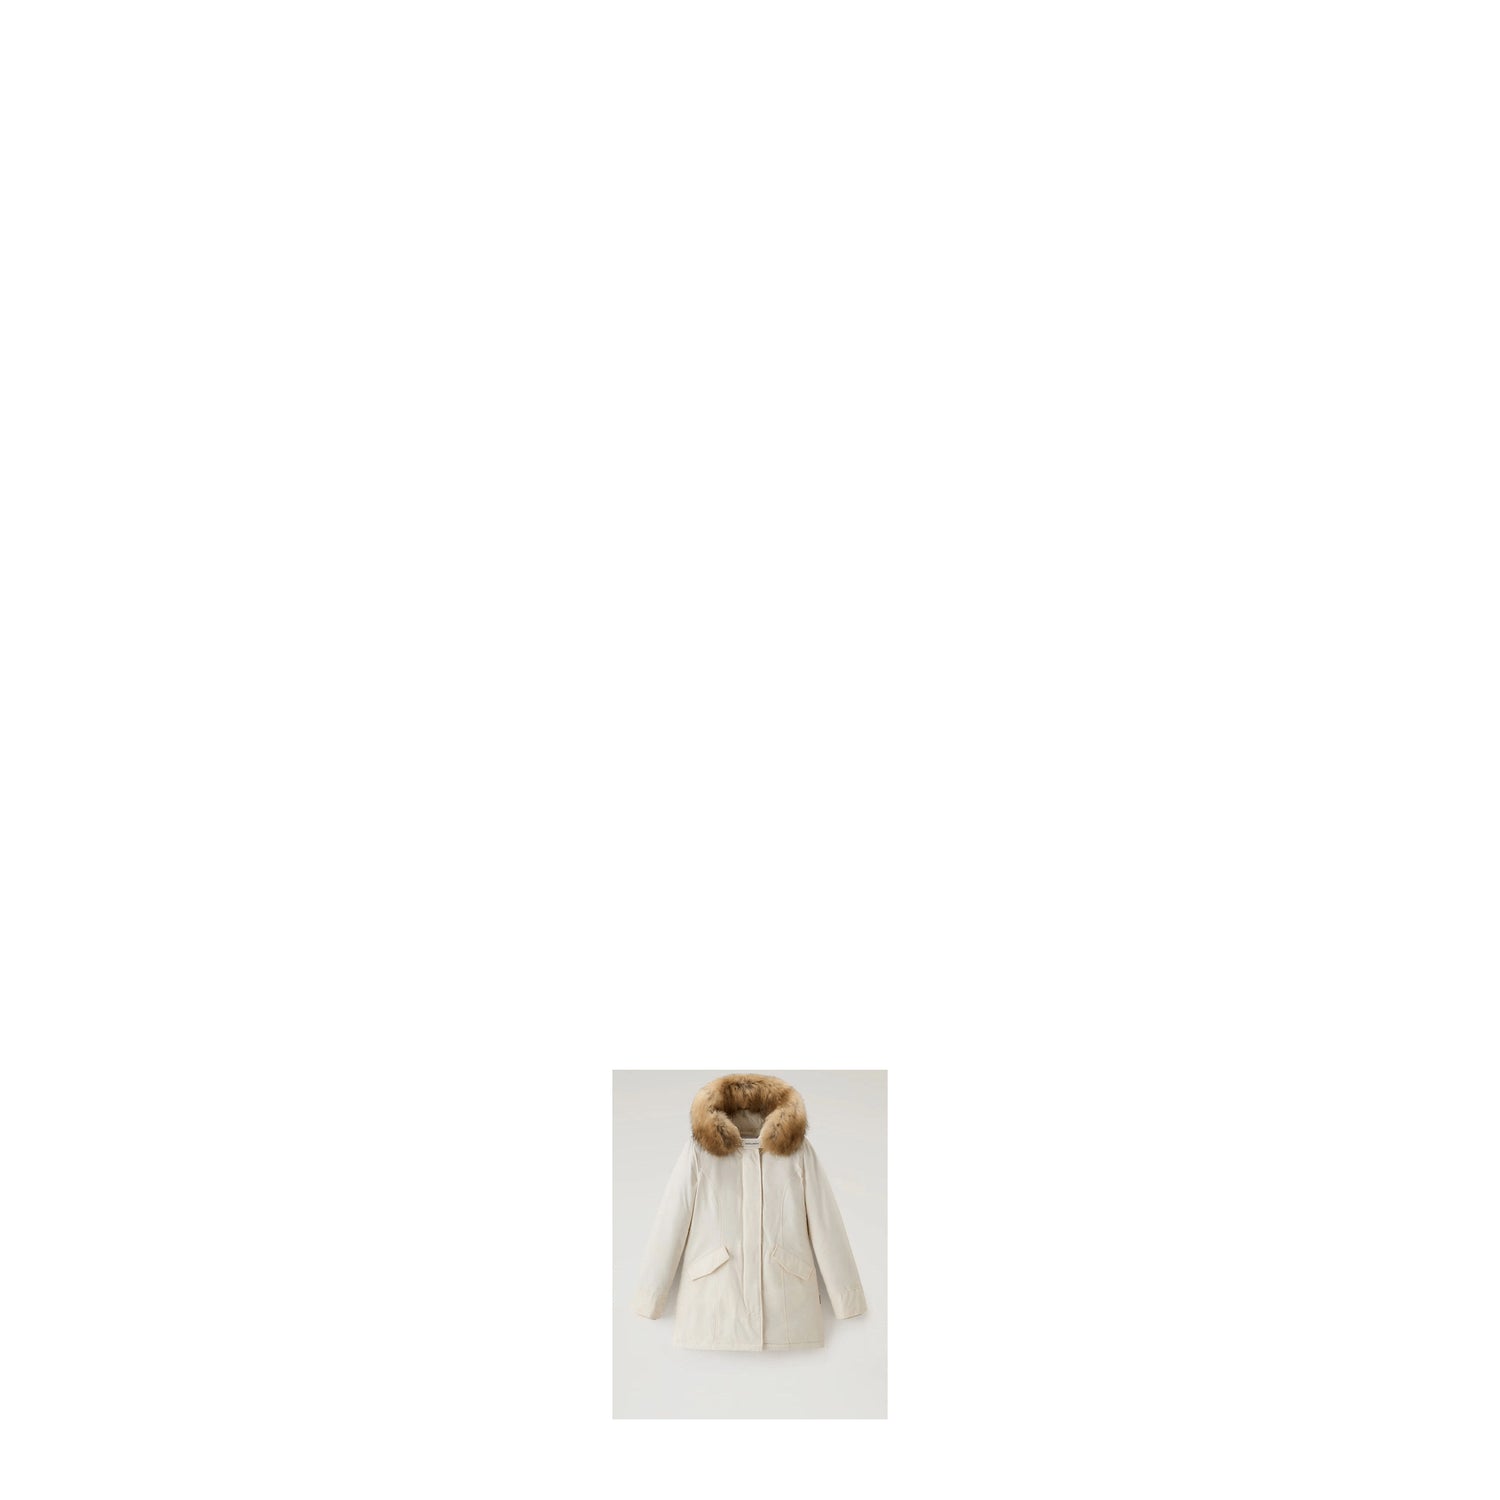 Woolrich Idee Regalo Jacket artic parka Donna Cotone Beige Crema di Latte